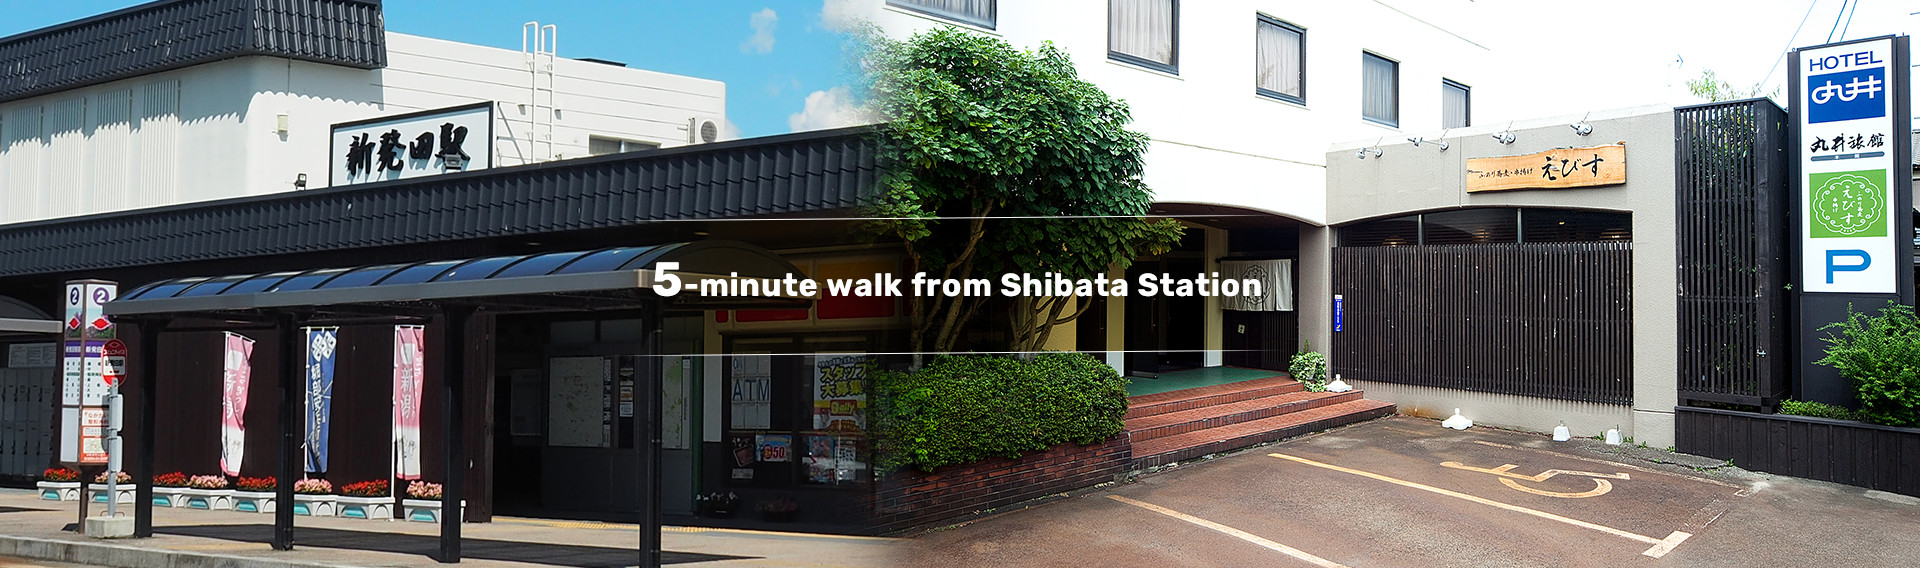 5-minute walk from Shibata Station